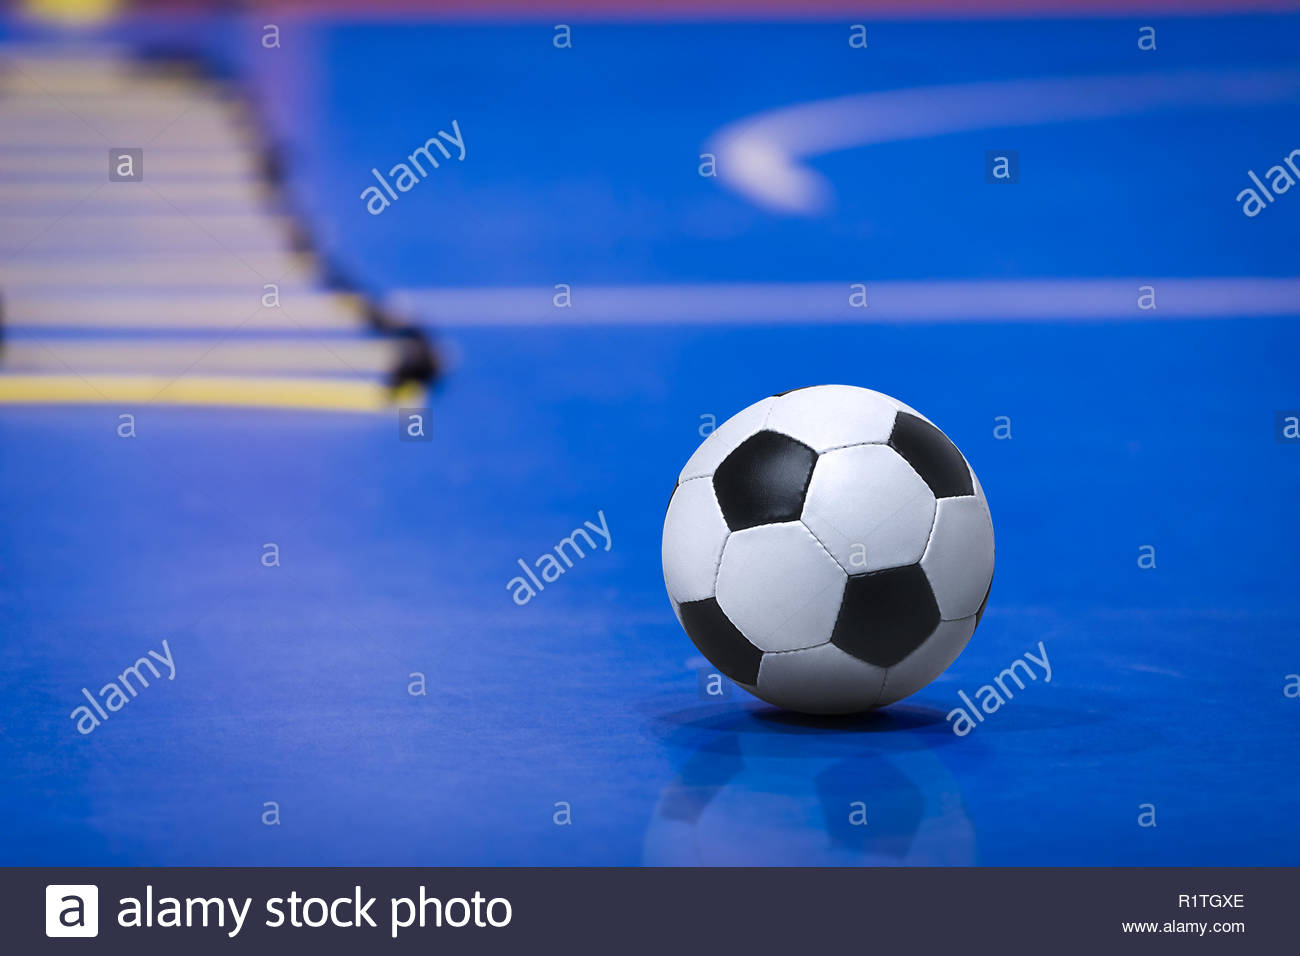 Soccer Football Ball On Futsal Field Blue Training Pitch